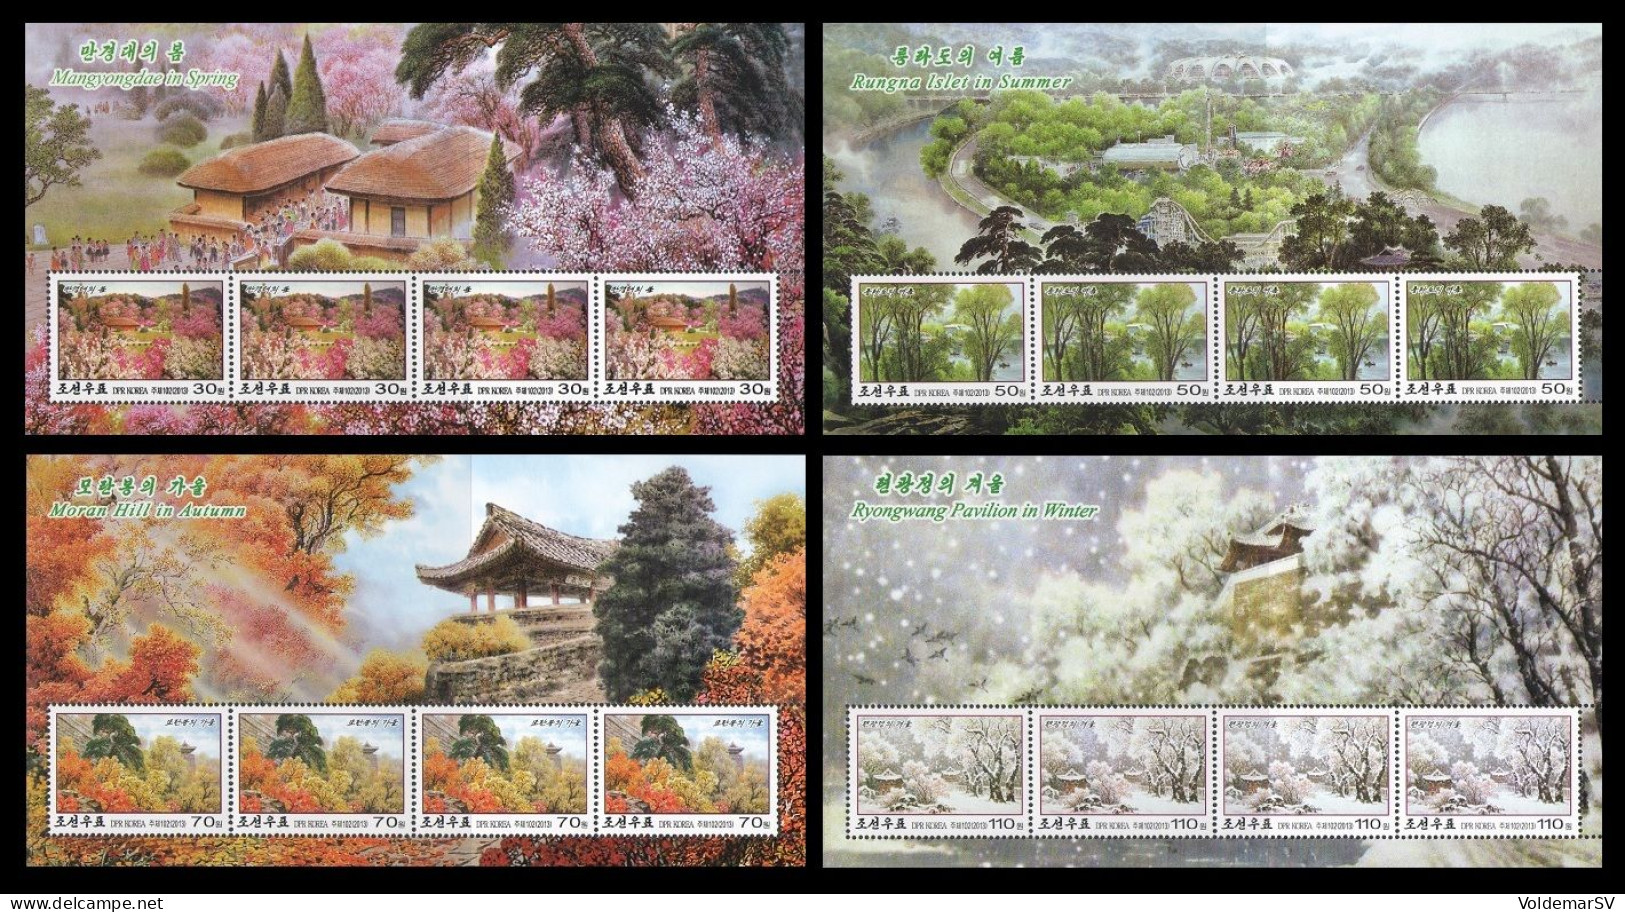 North Korea 2013 Mih. 6029/32 Four Seasons (4 M/S) MNH ** - Korea, North